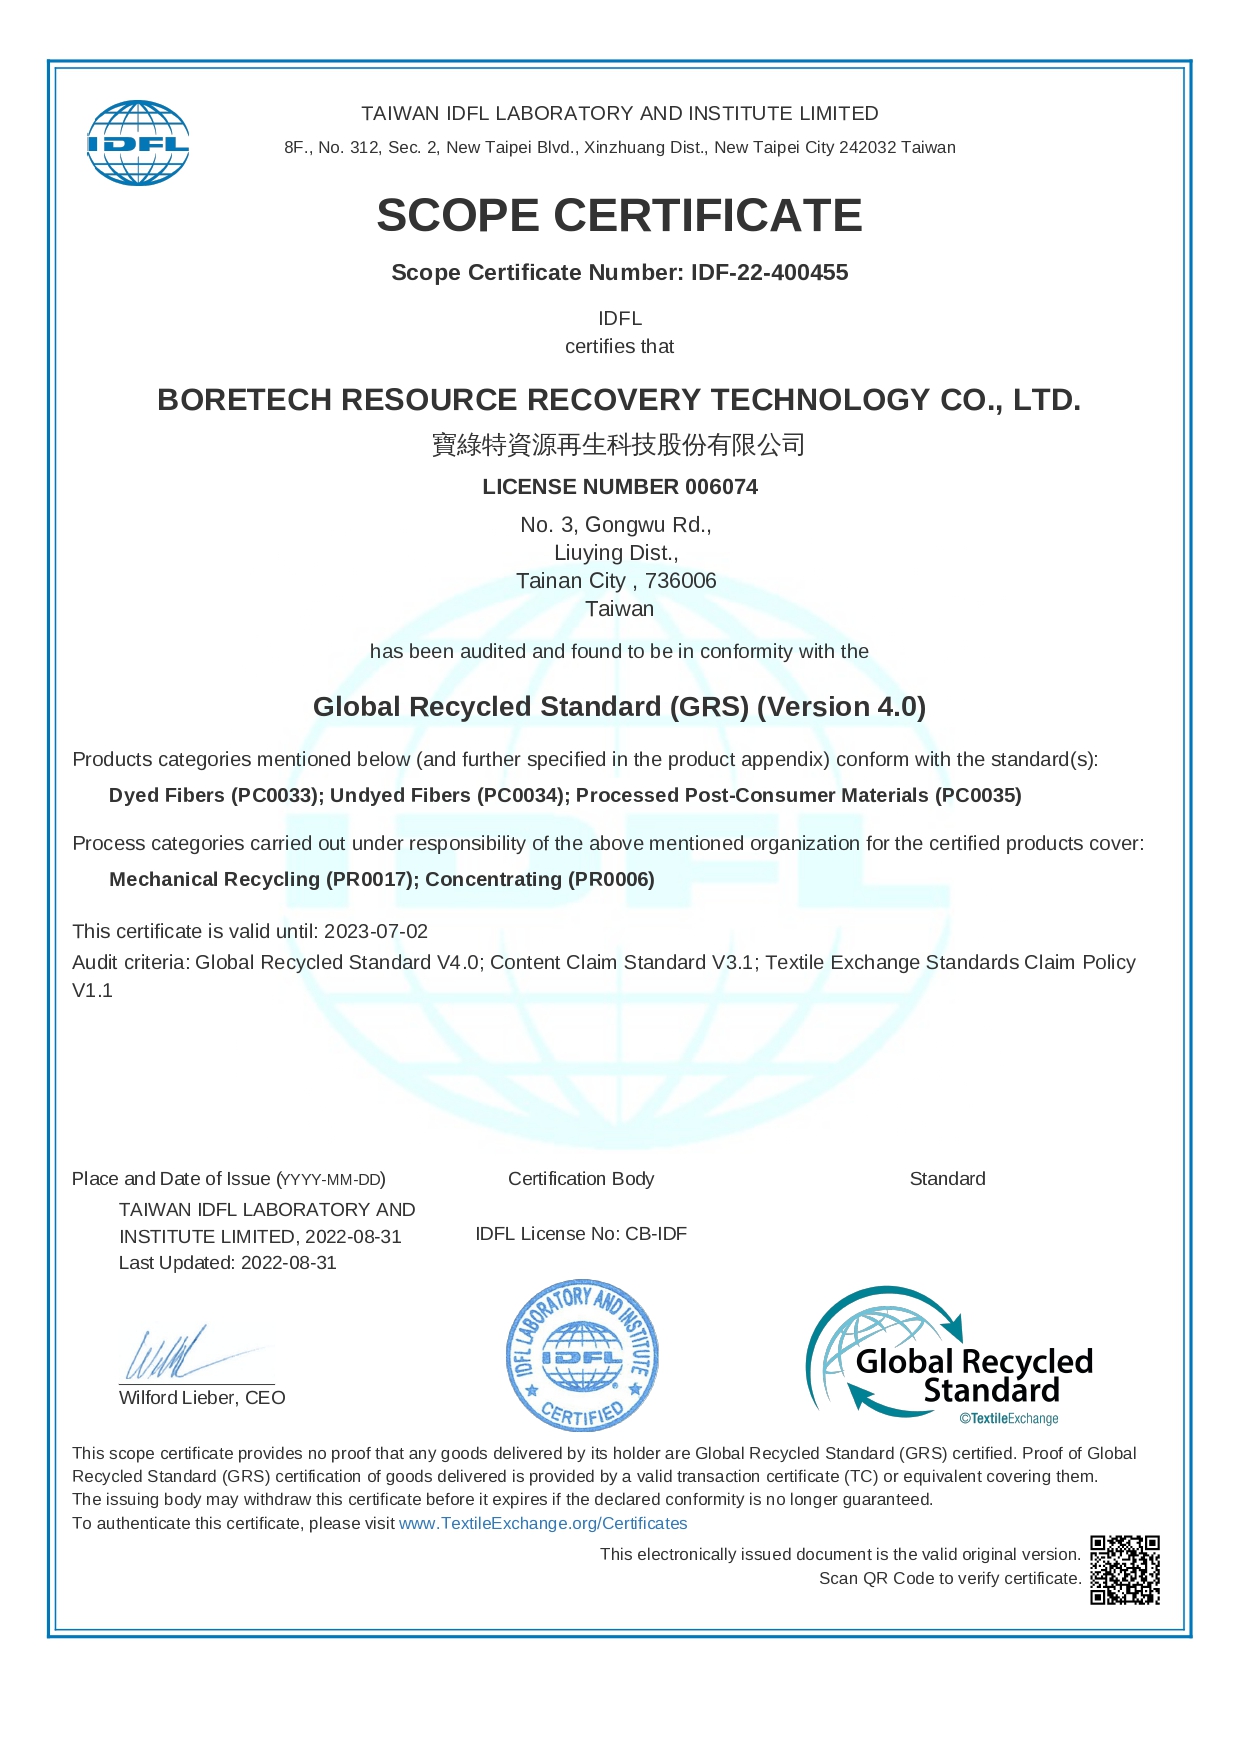 IDFL 22 400455 GRS Certificate boretech resource recovery technology co ltd 31 Aug 2022 page 0001